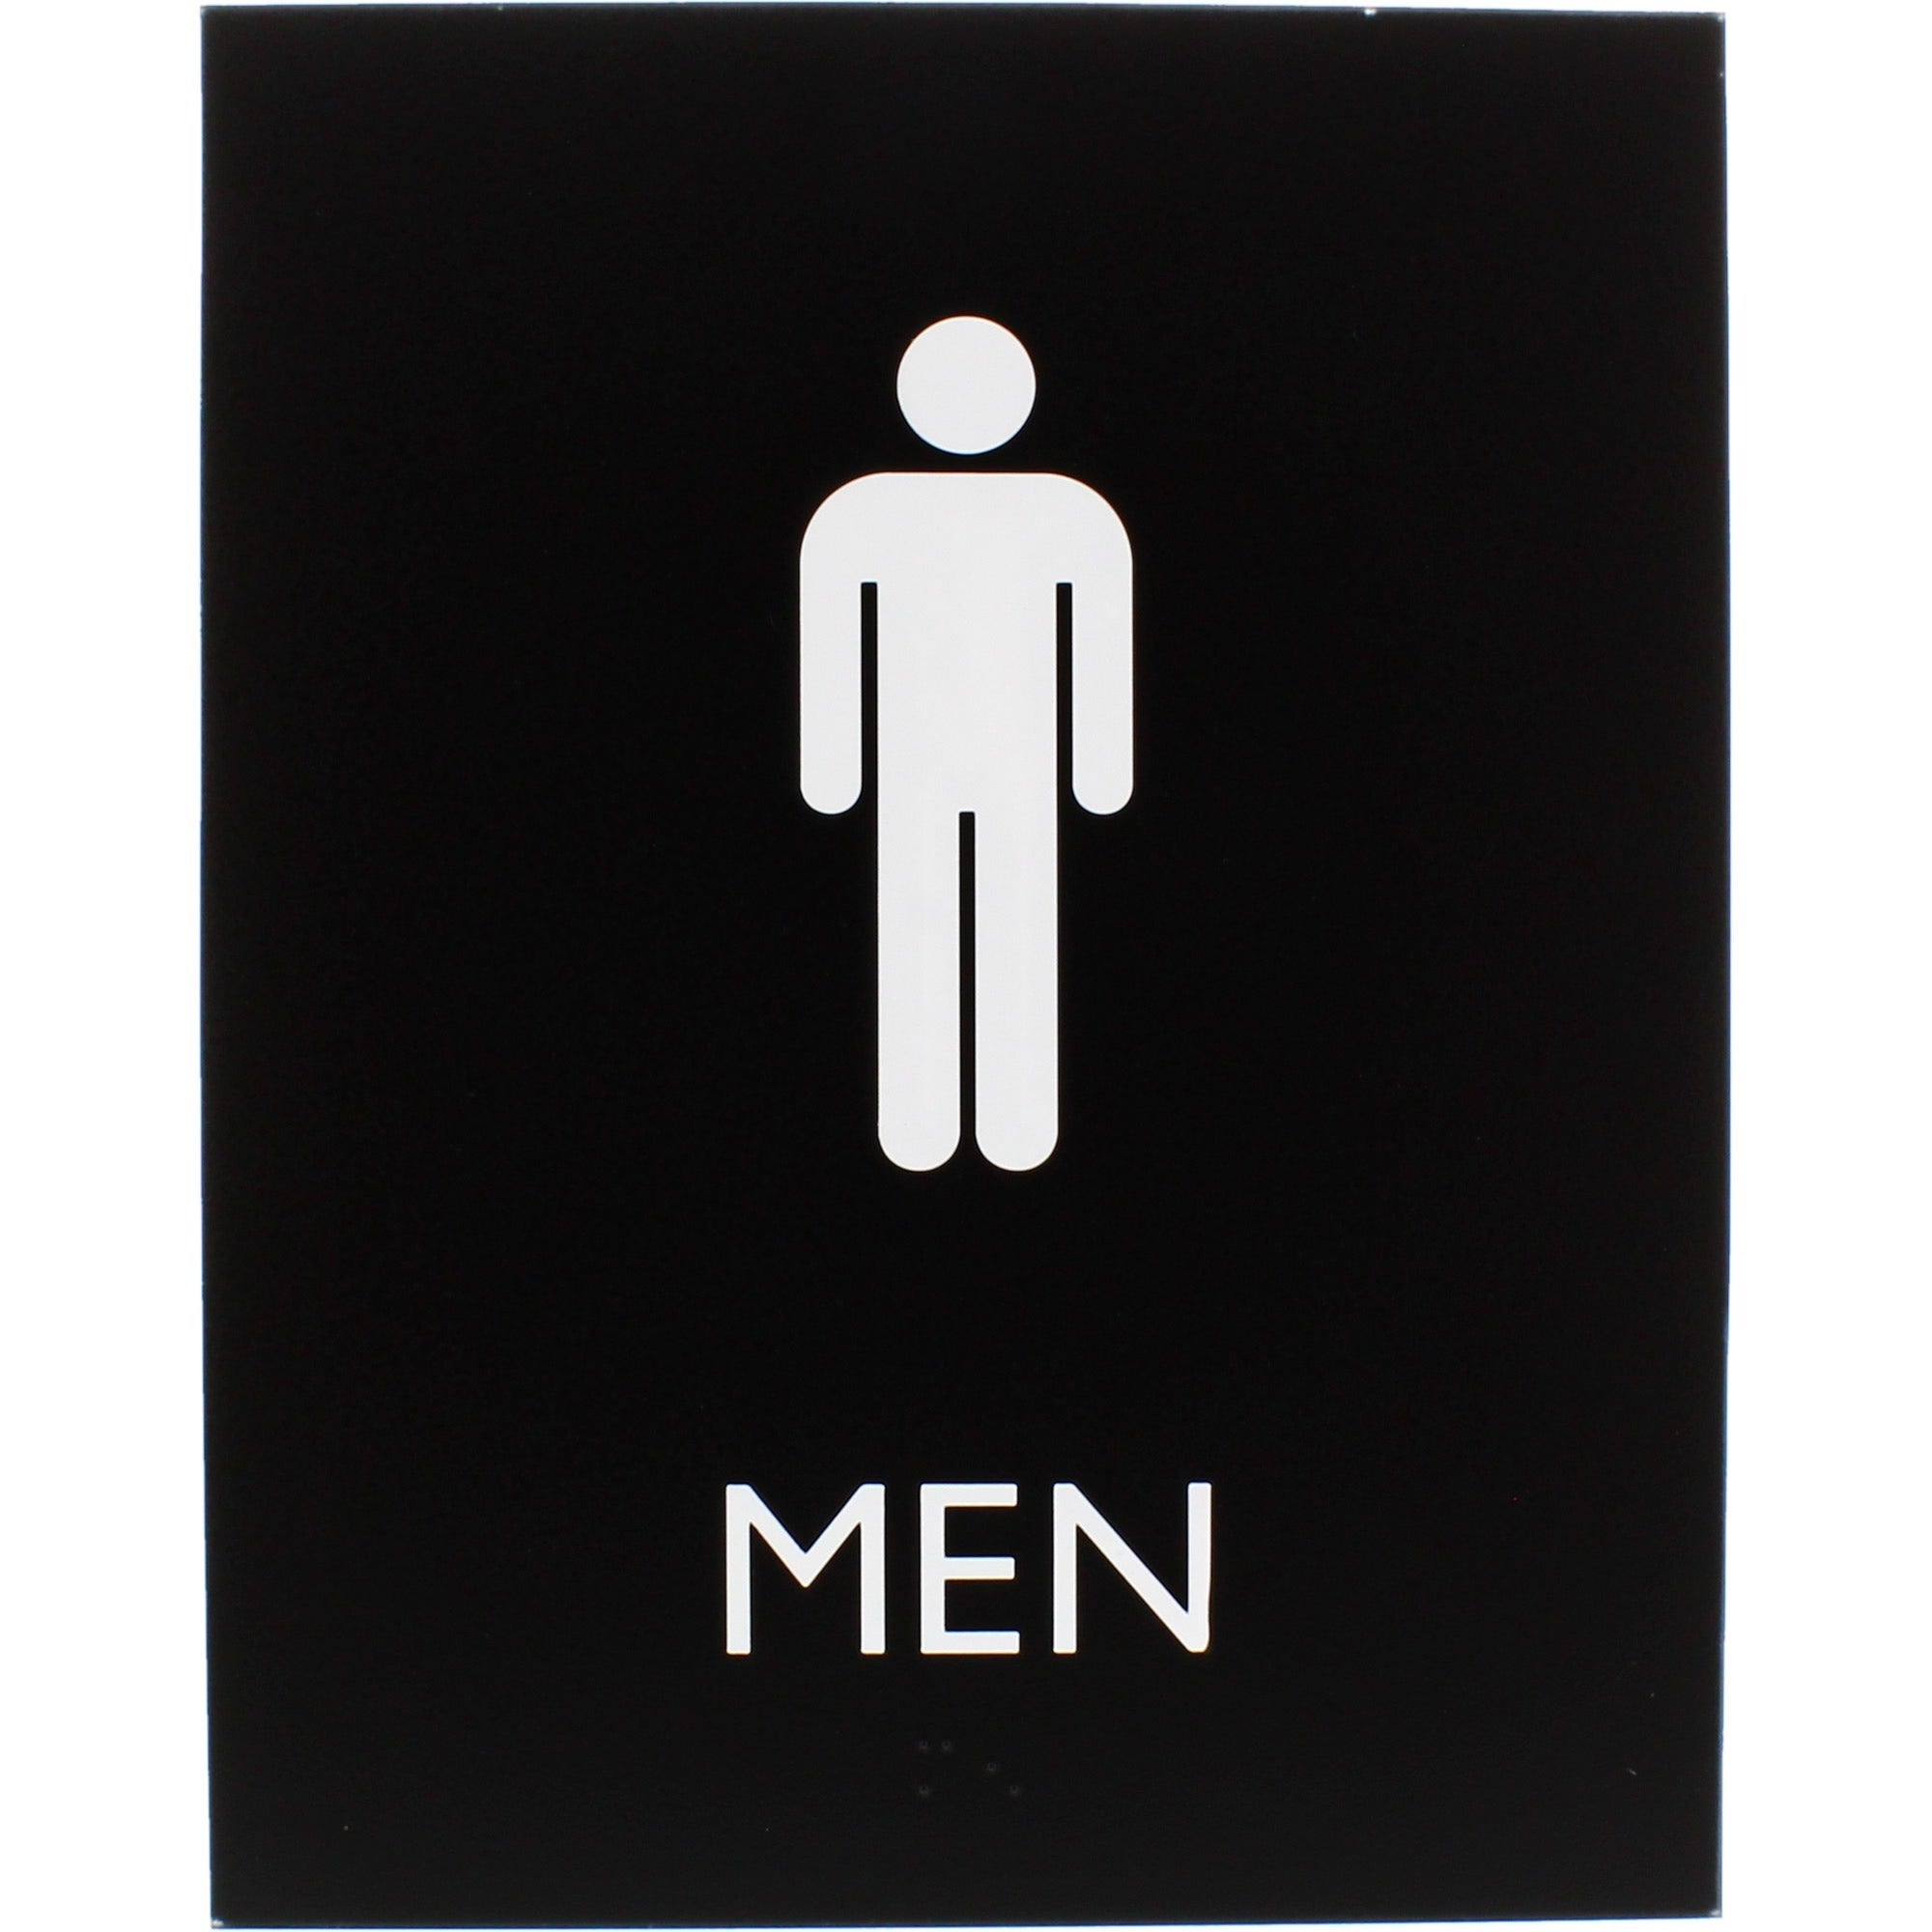 lorell-mens-restroom-sign-1-each-men-print-message-64-width-x-85-height-rectangular-shape-surface-mountable-easy-readability-braille-plastic-black_llr02667 - 1